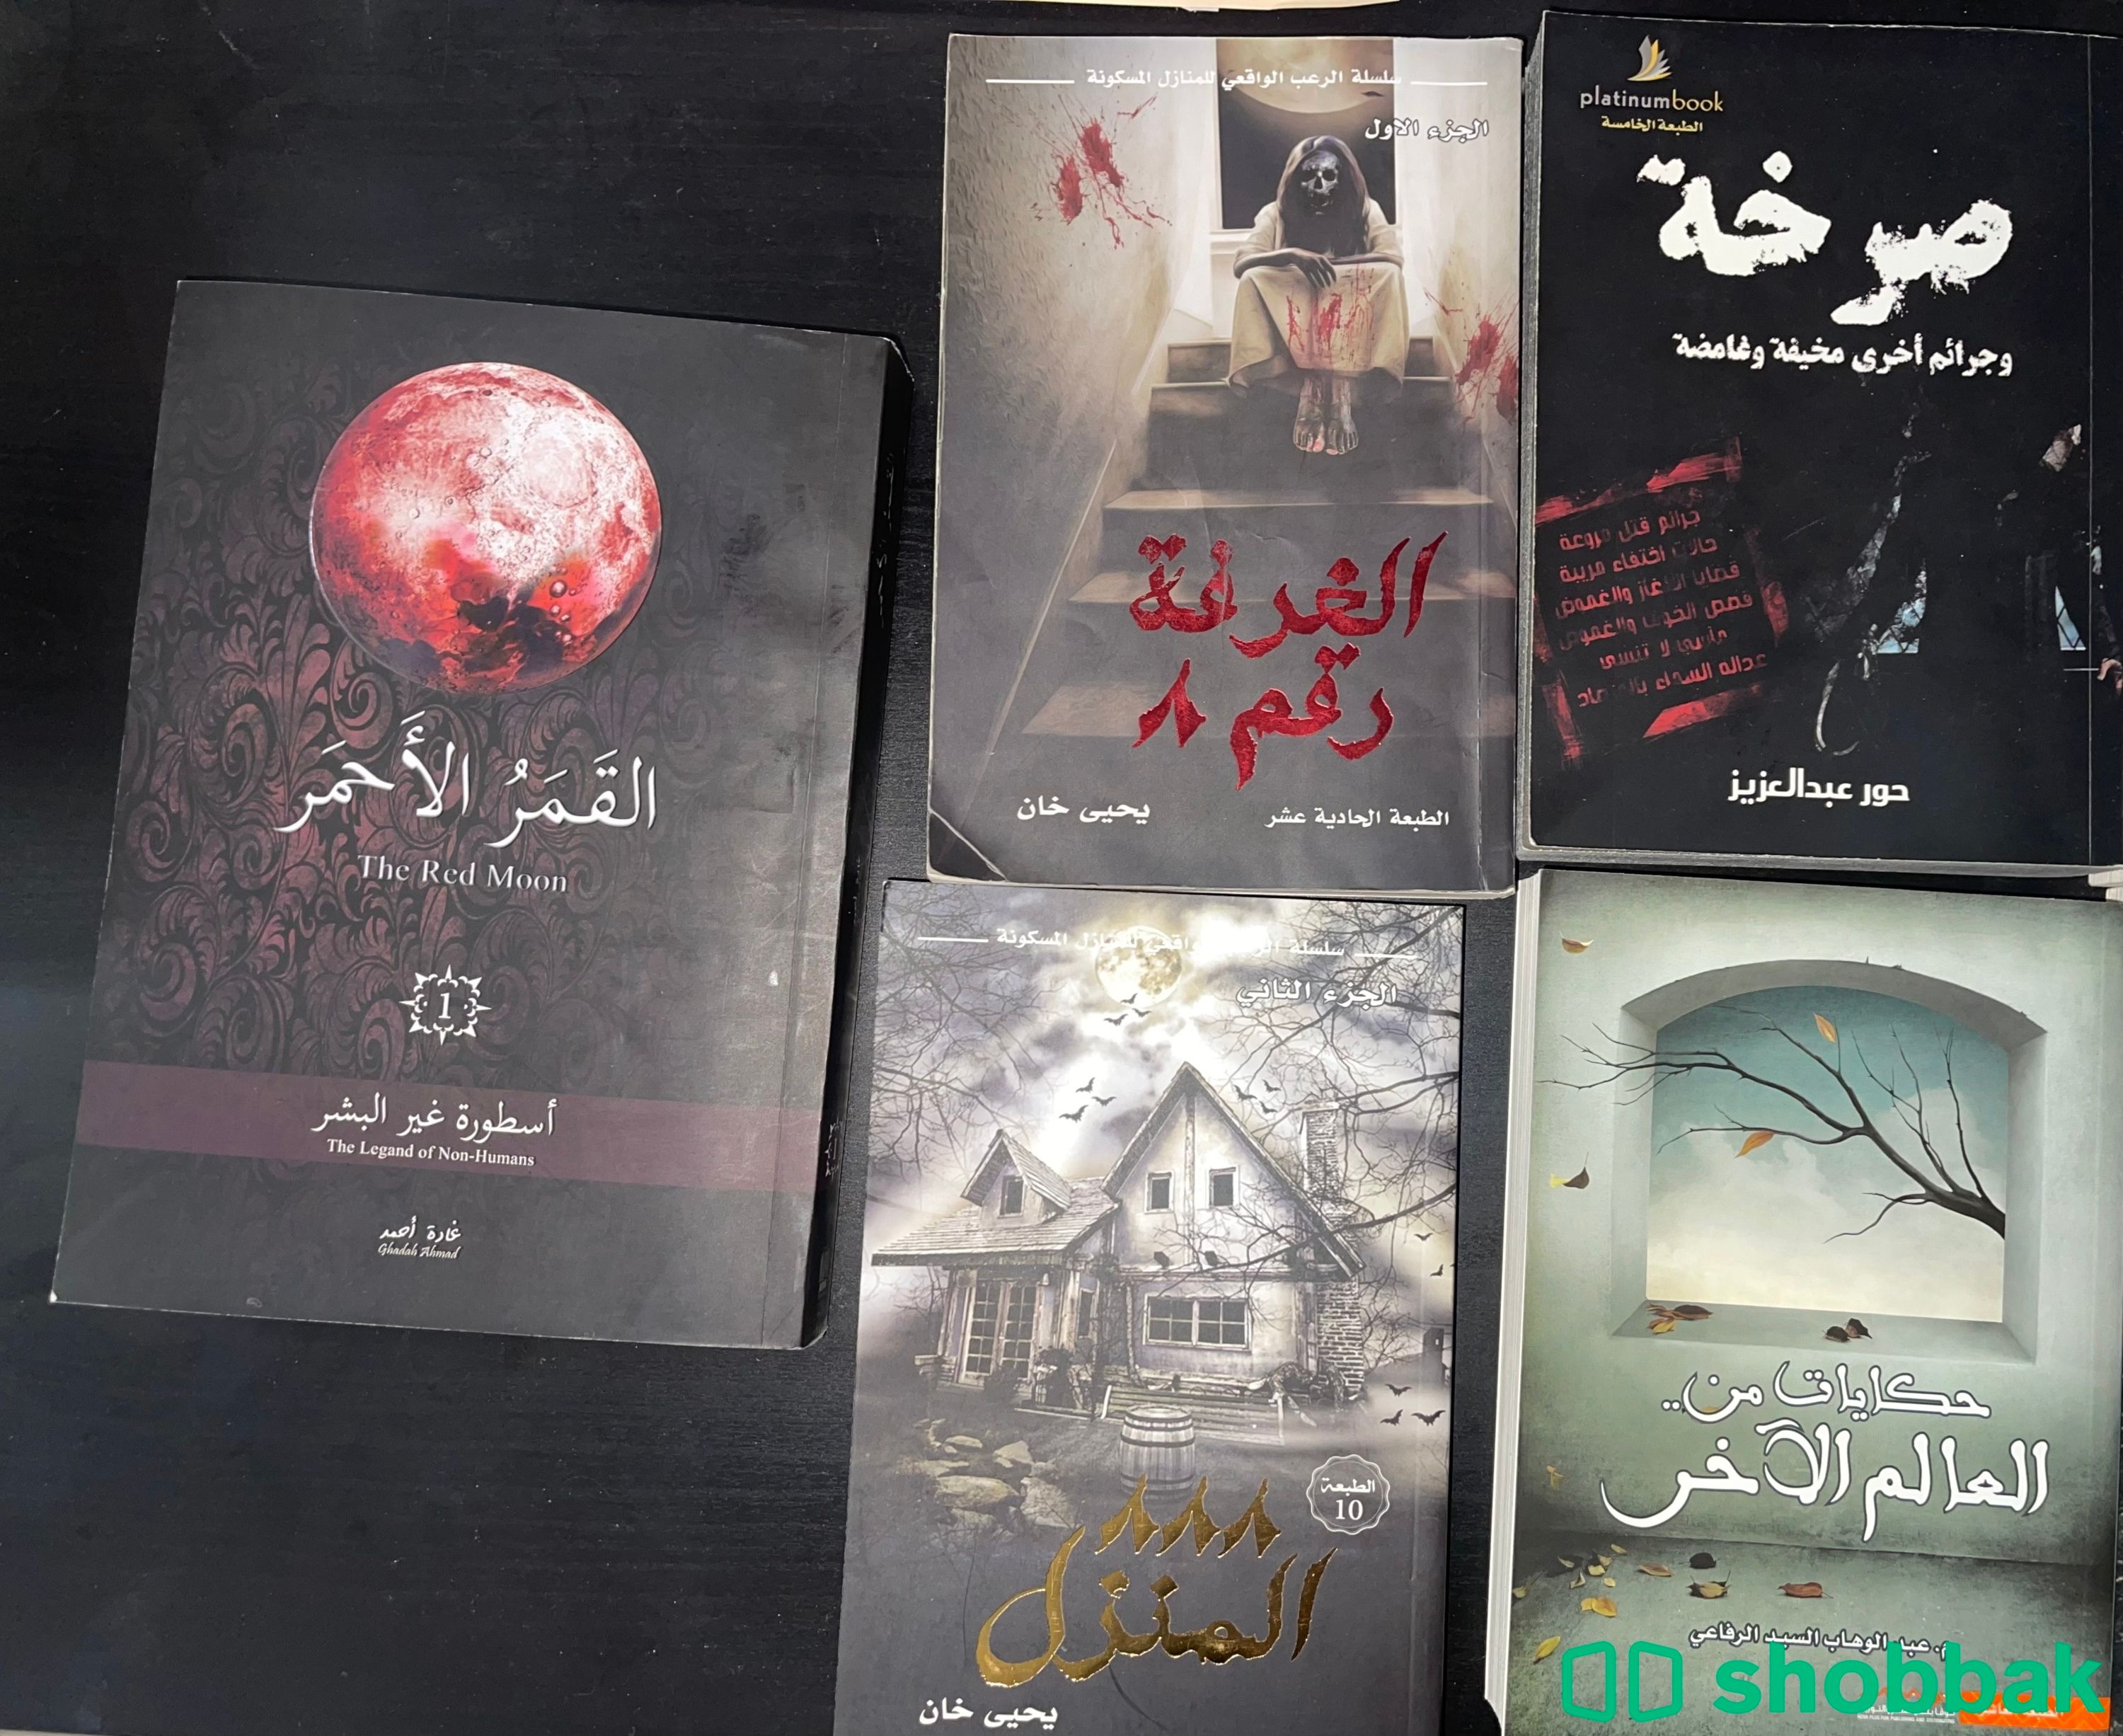 روايات تصنيف رعب وجريمة Shobbak Saudi Arabia